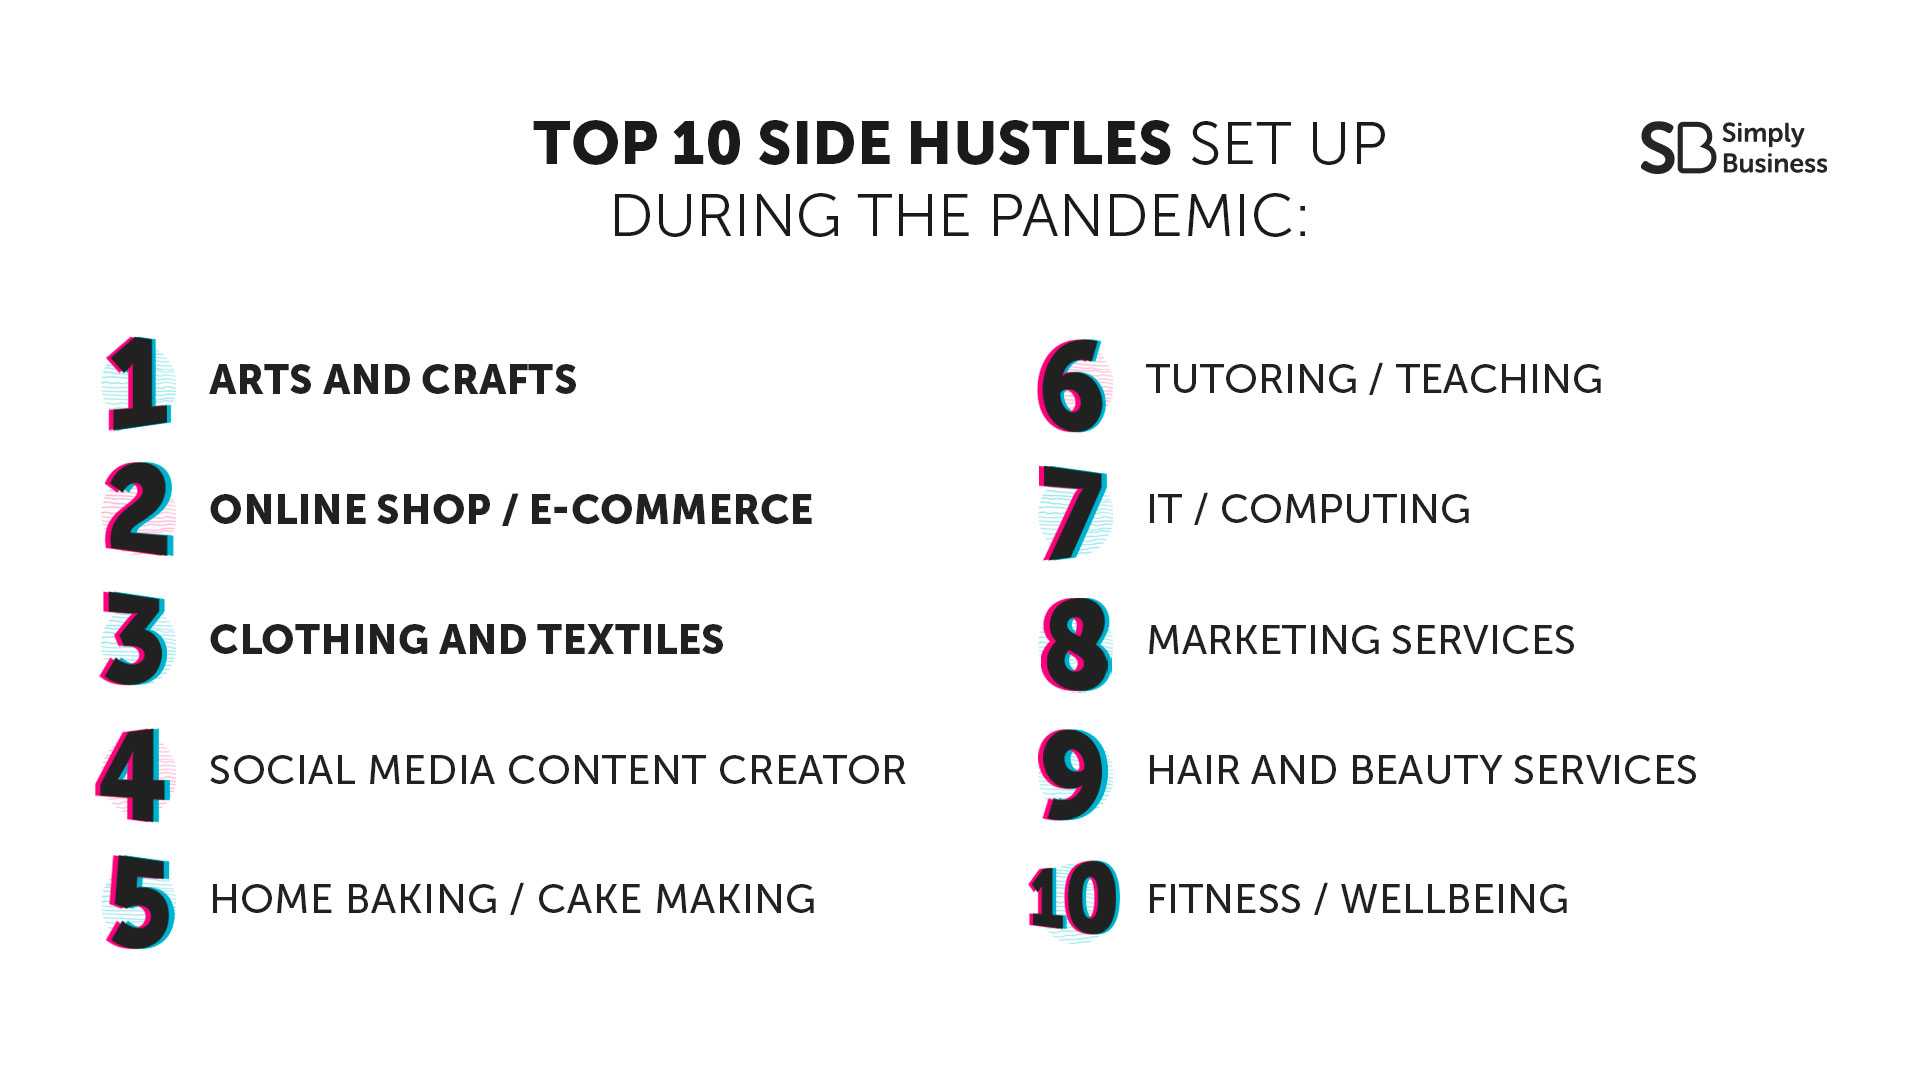 Examples of top side hustles